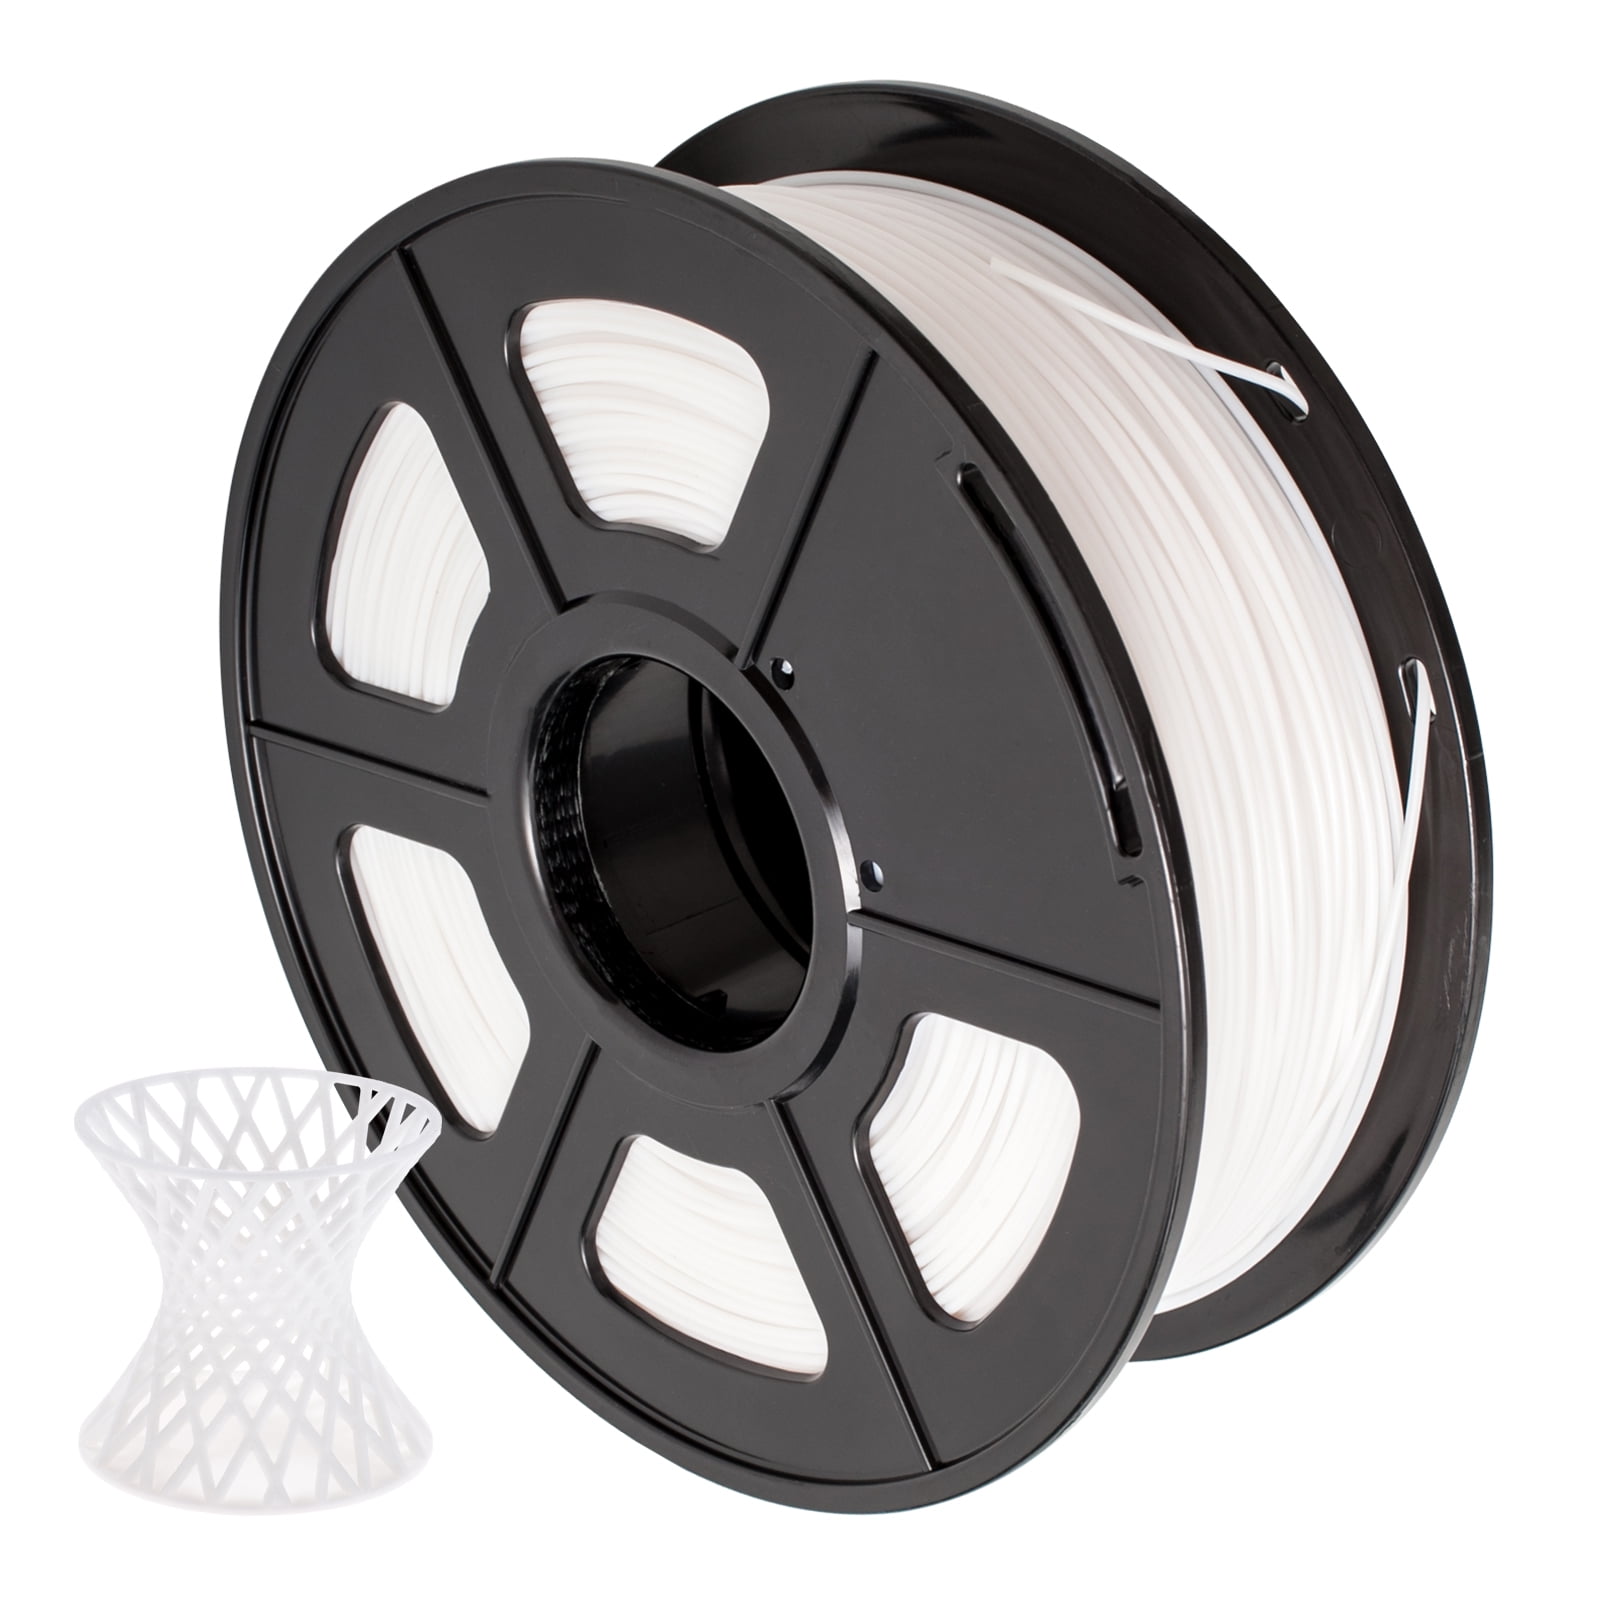 SUNLU PETG 3D filament 1.75mm 1KG PETG 3D Printer Filament 2.2lb 1.75 mm 1 kg Spool Dimensional Accuracy +/- 0.02 mm Blue PETG 